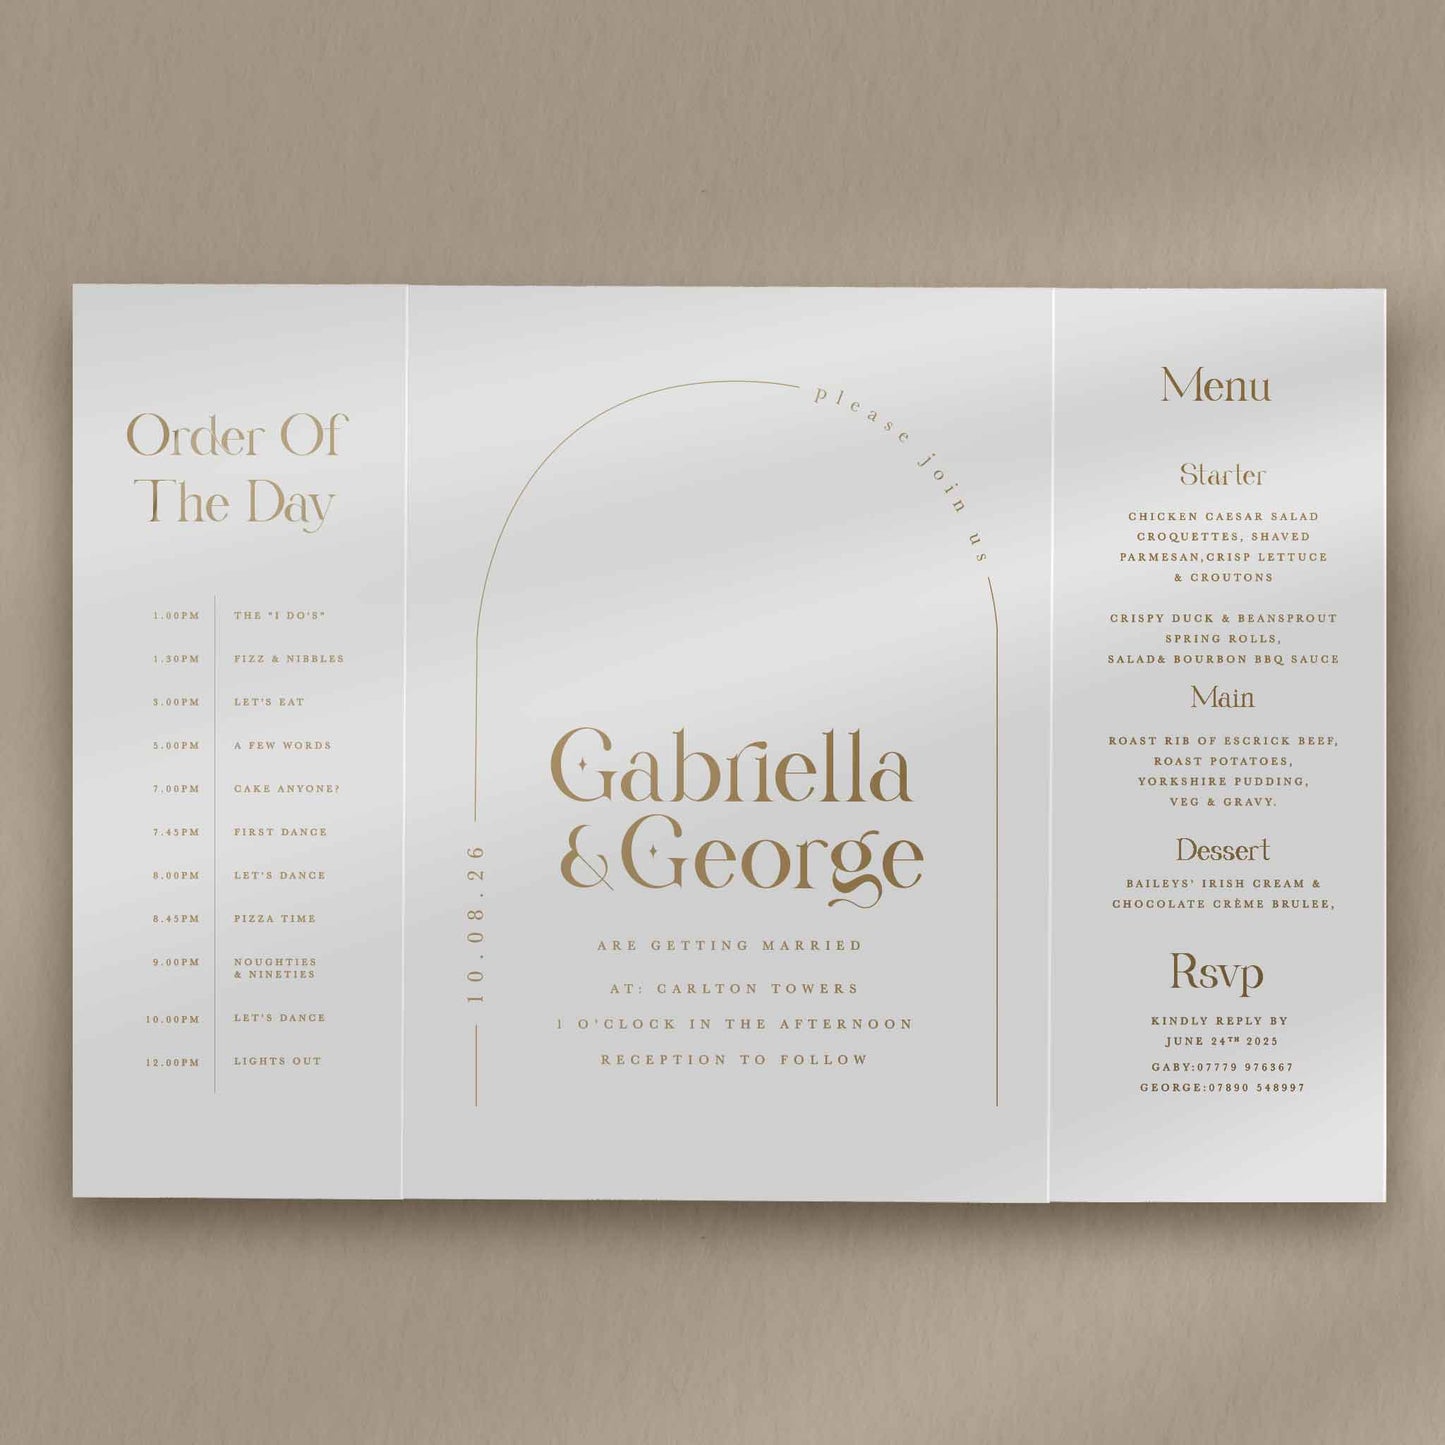 Gabriella Gatefold Invitation  Ivy and Gold Wedding Stationery   